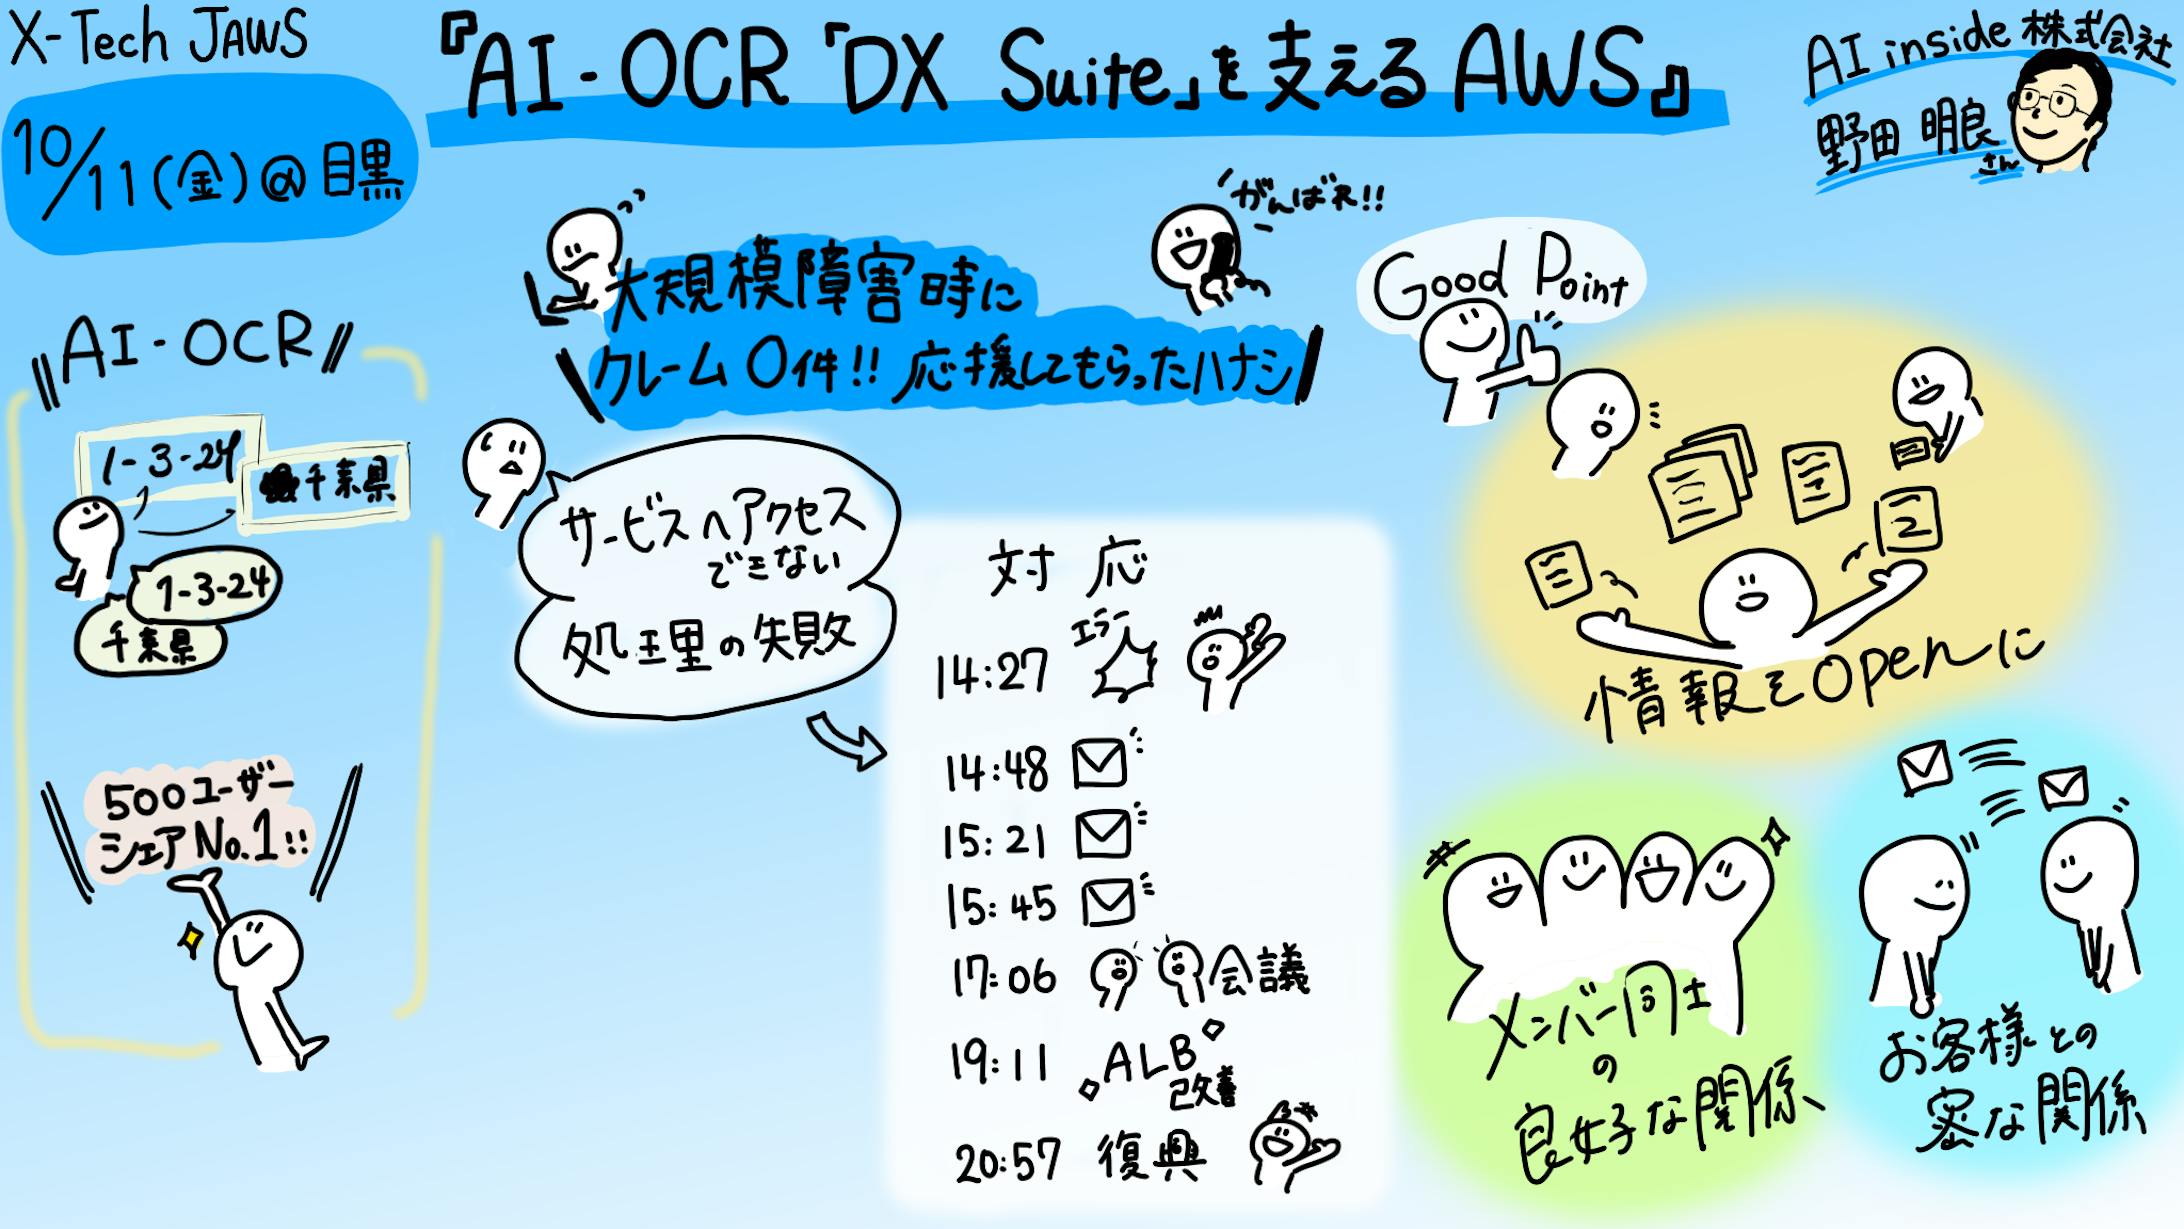 X-Tech JAWS『AI-OCR「DX Suite」を支えるAWS』野田 明良氏-1